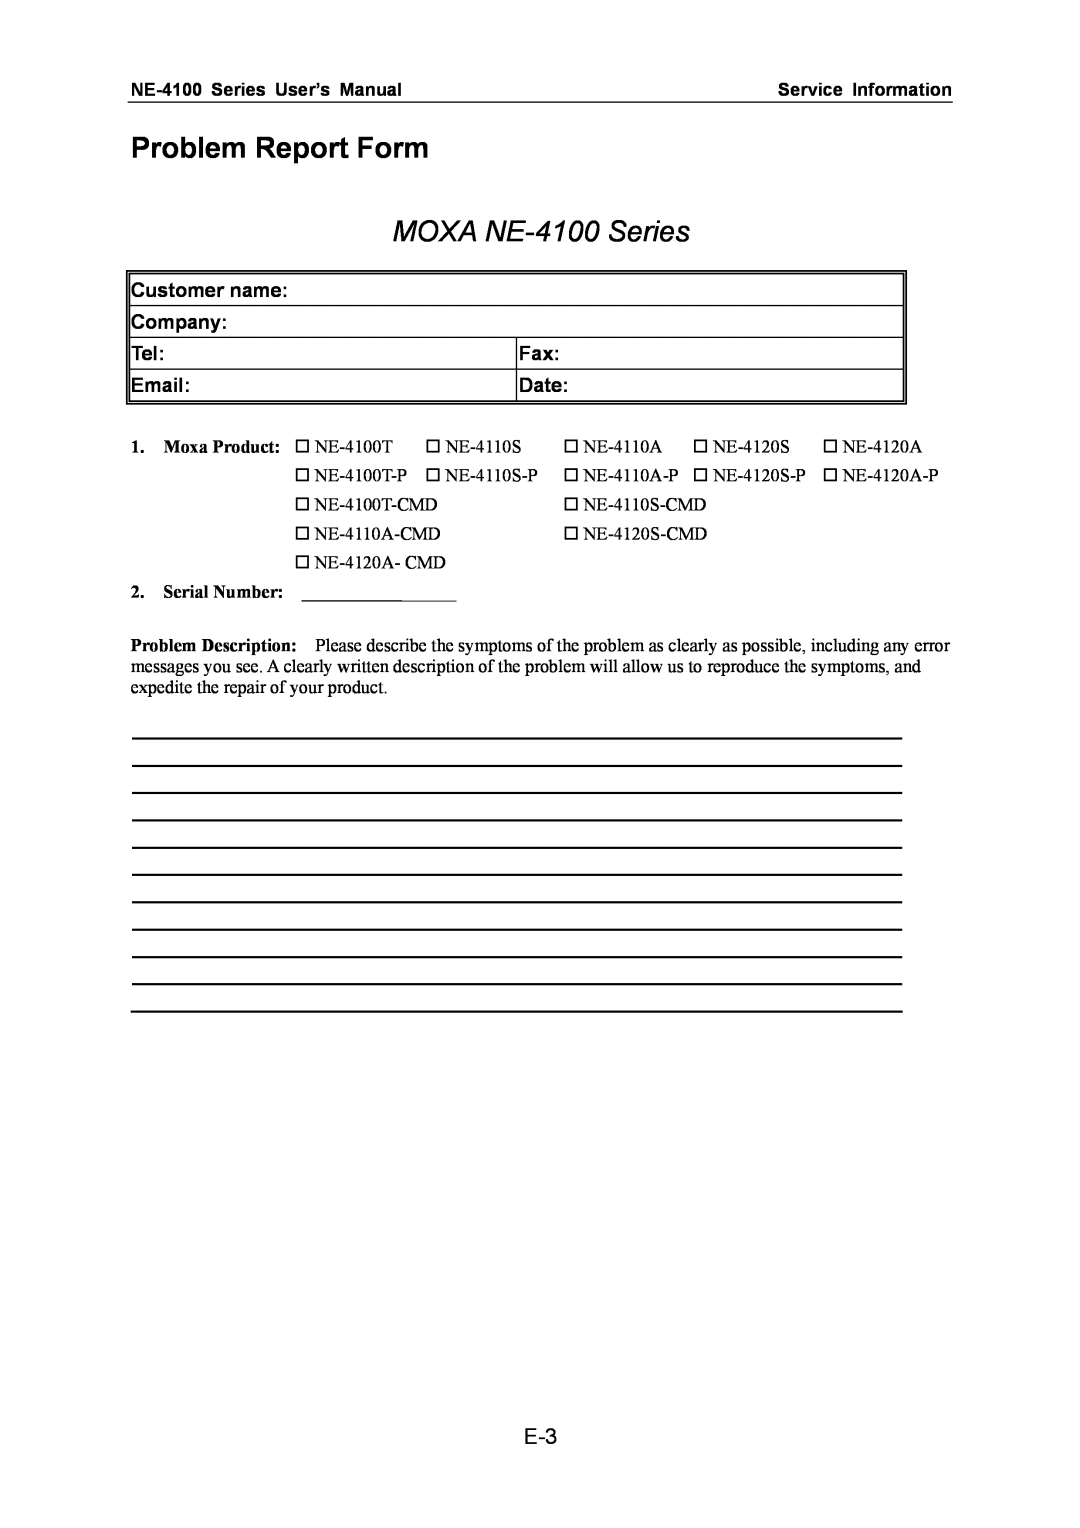 Moxa Technologies Problem Report Form, MOXA NE-4100 Series, NE-4100 Series User’s Manual, Service Information 